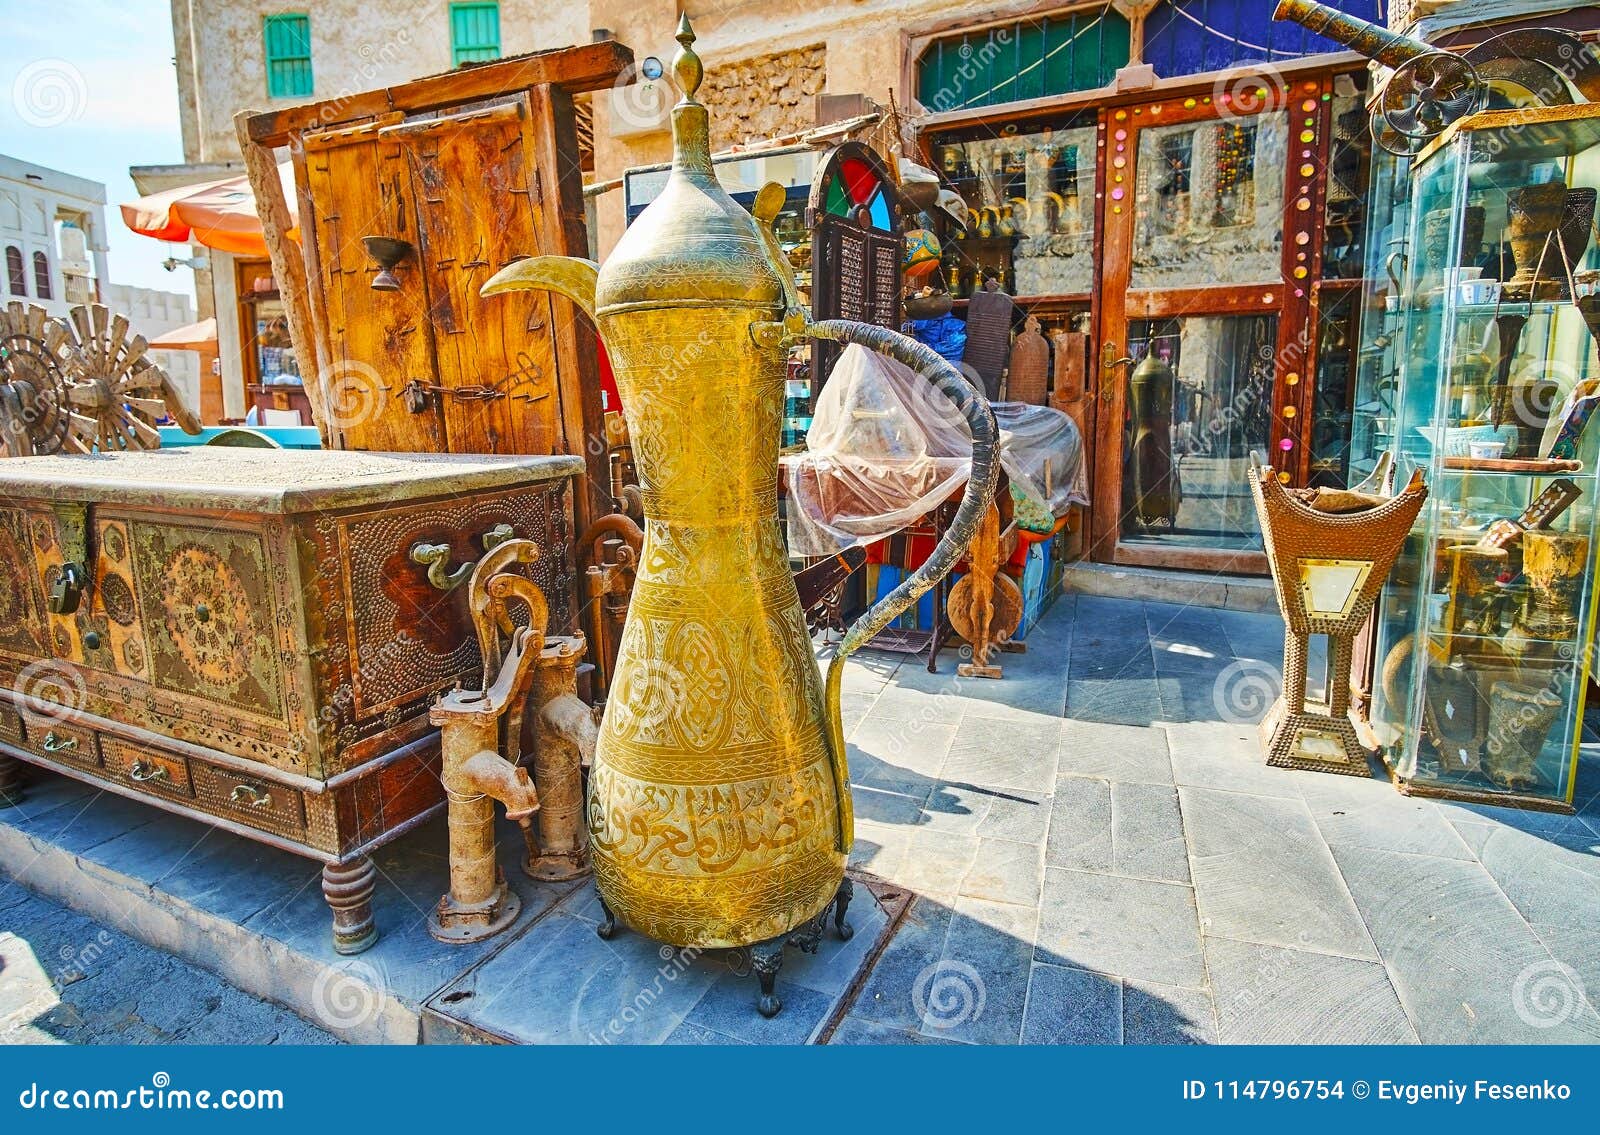 vintage furniture in souq waqif, doha, qatar